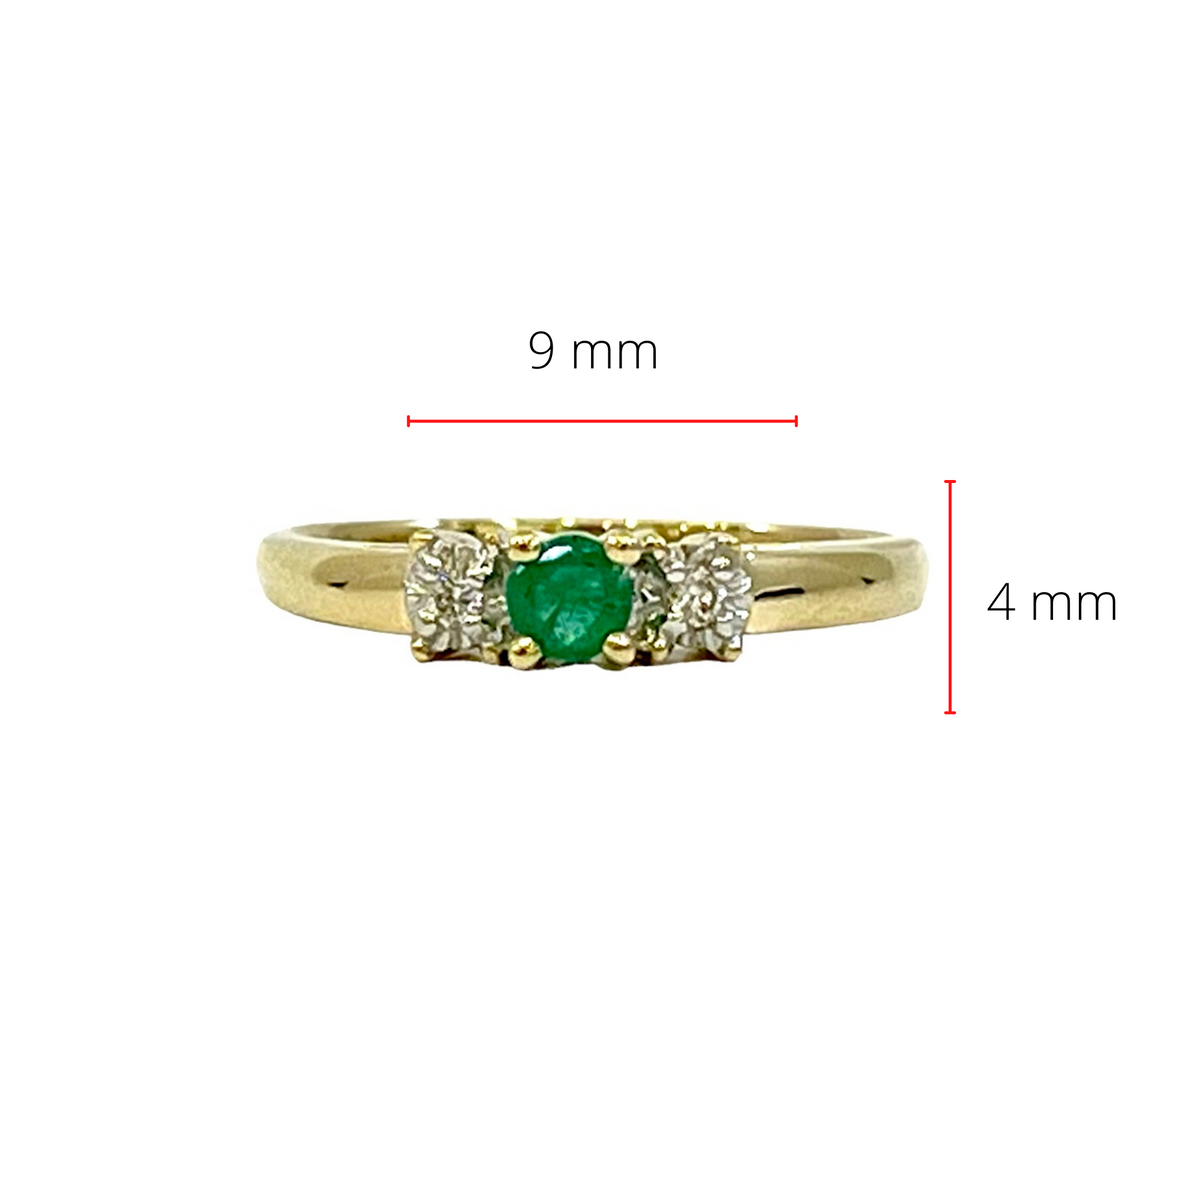 10K Yellow Gold Emerald and Diamond 3 Stone Ring - Size 6